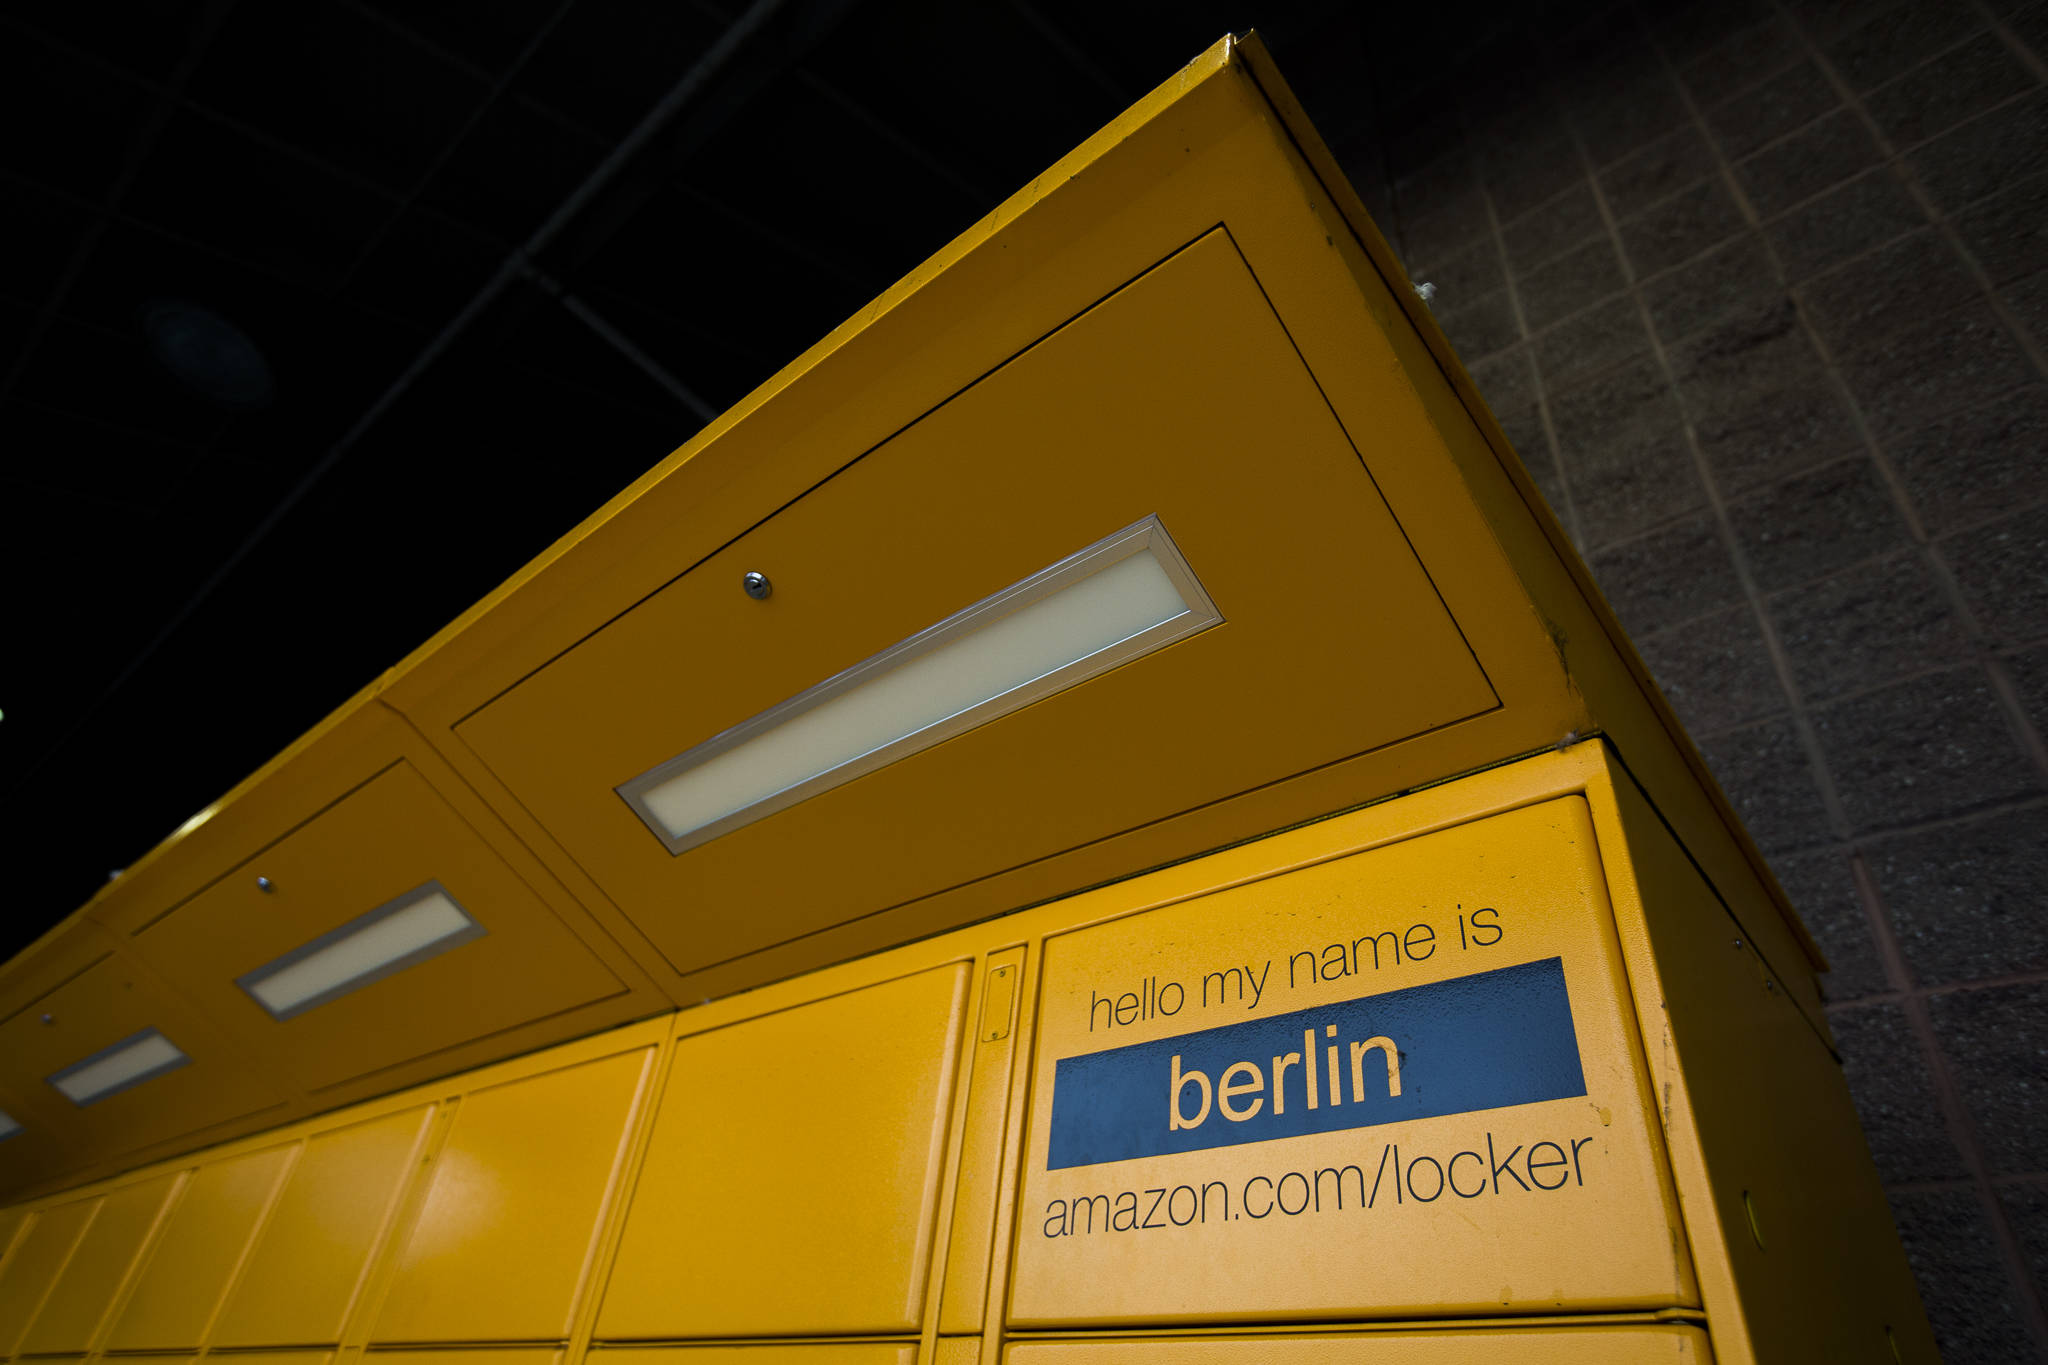 Amazon Locker “Berlin” outside of Safeway on the corner of 41st Street and Rucker Avenue on Thursday, Jan. 2, 2020 in Everett, Wash. (Olivia Vanni / The Herald).